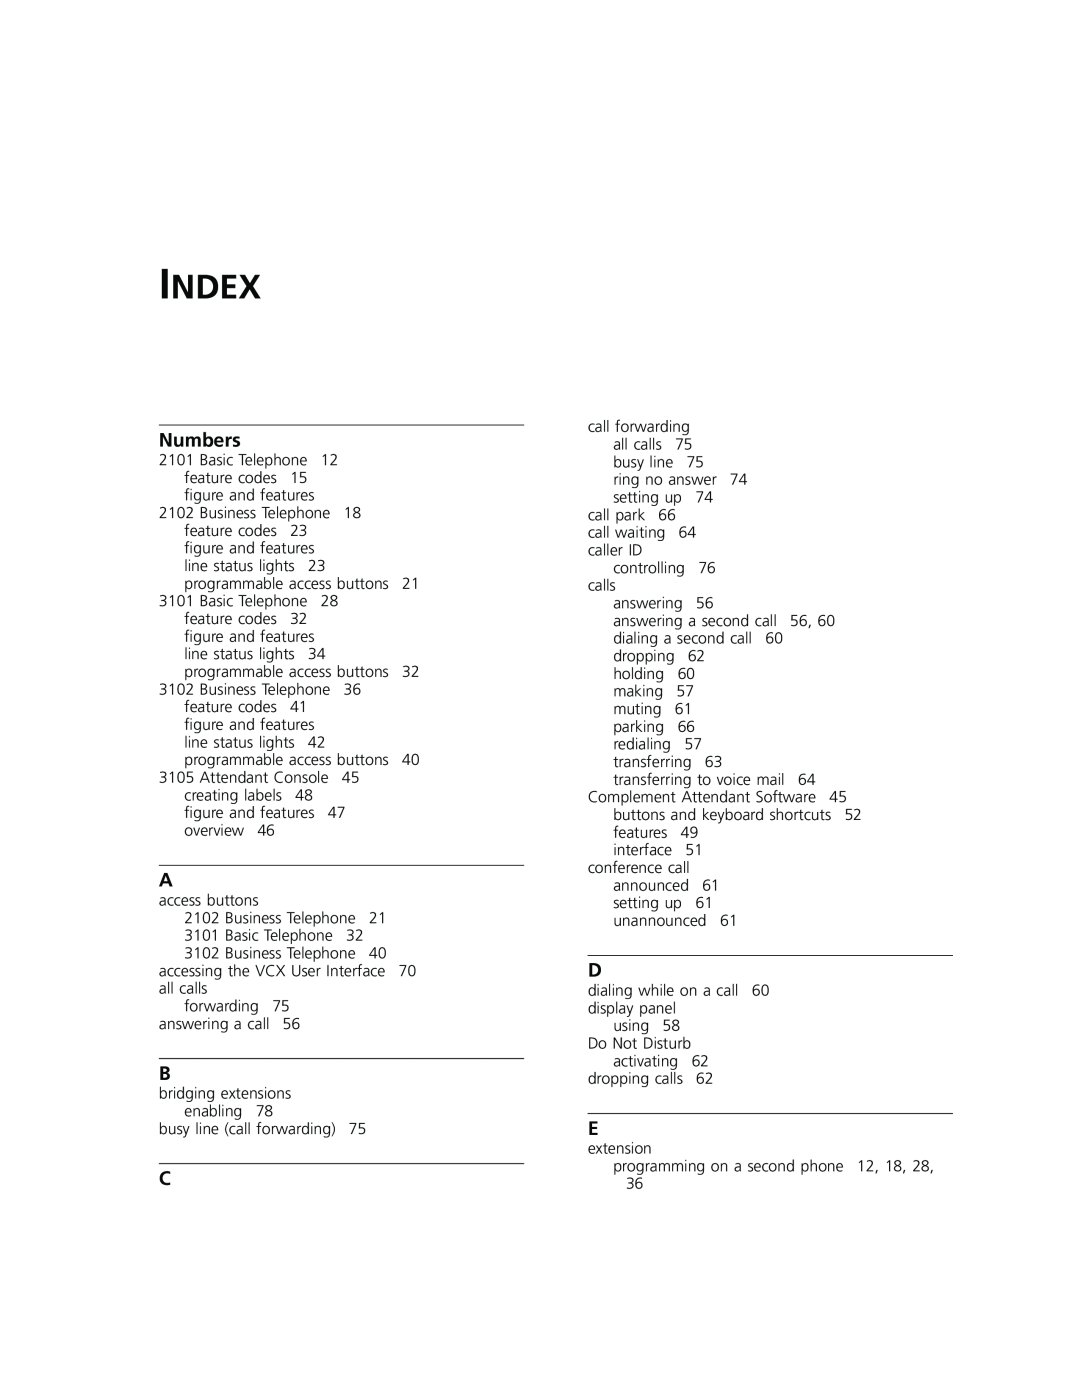 3Com V7000 manual Index, Numbers 